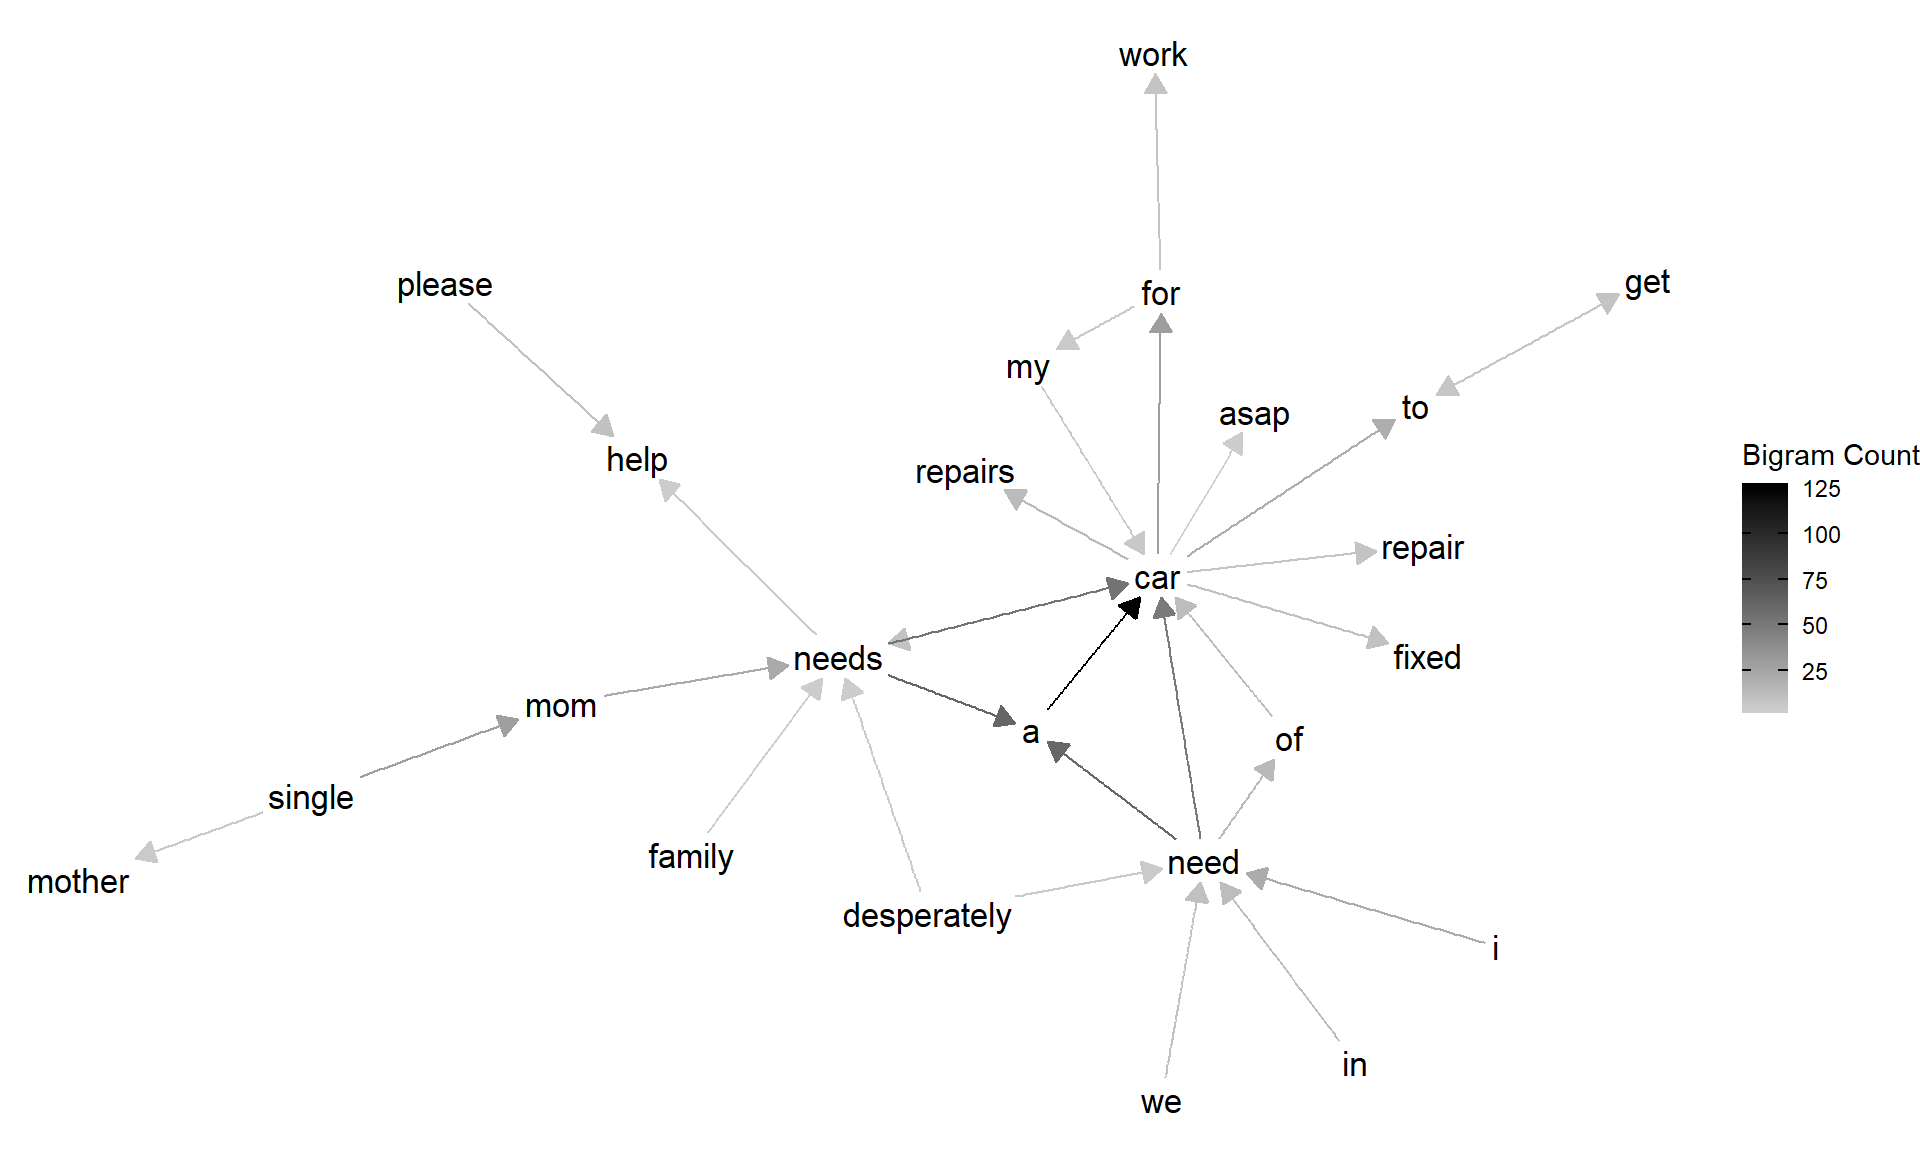 bigram chart showing word relationship